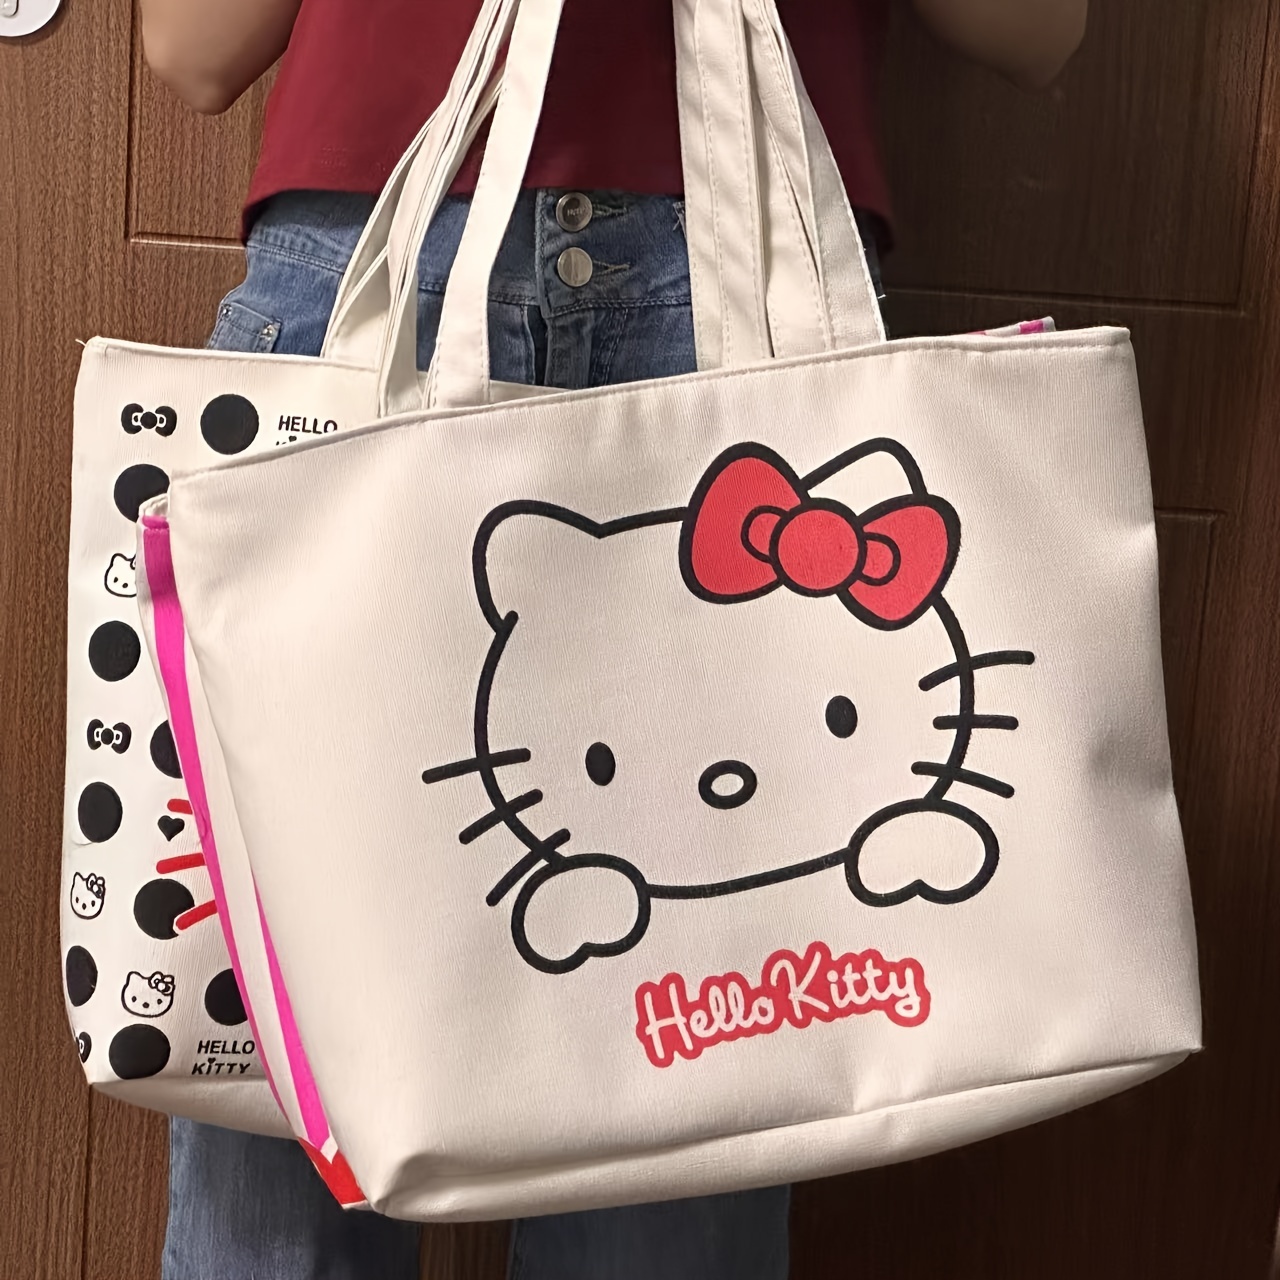 

Hello Kitty Cute Cartoon Printed Tote Bag, Travel Shoulder Bag With Large Capacity